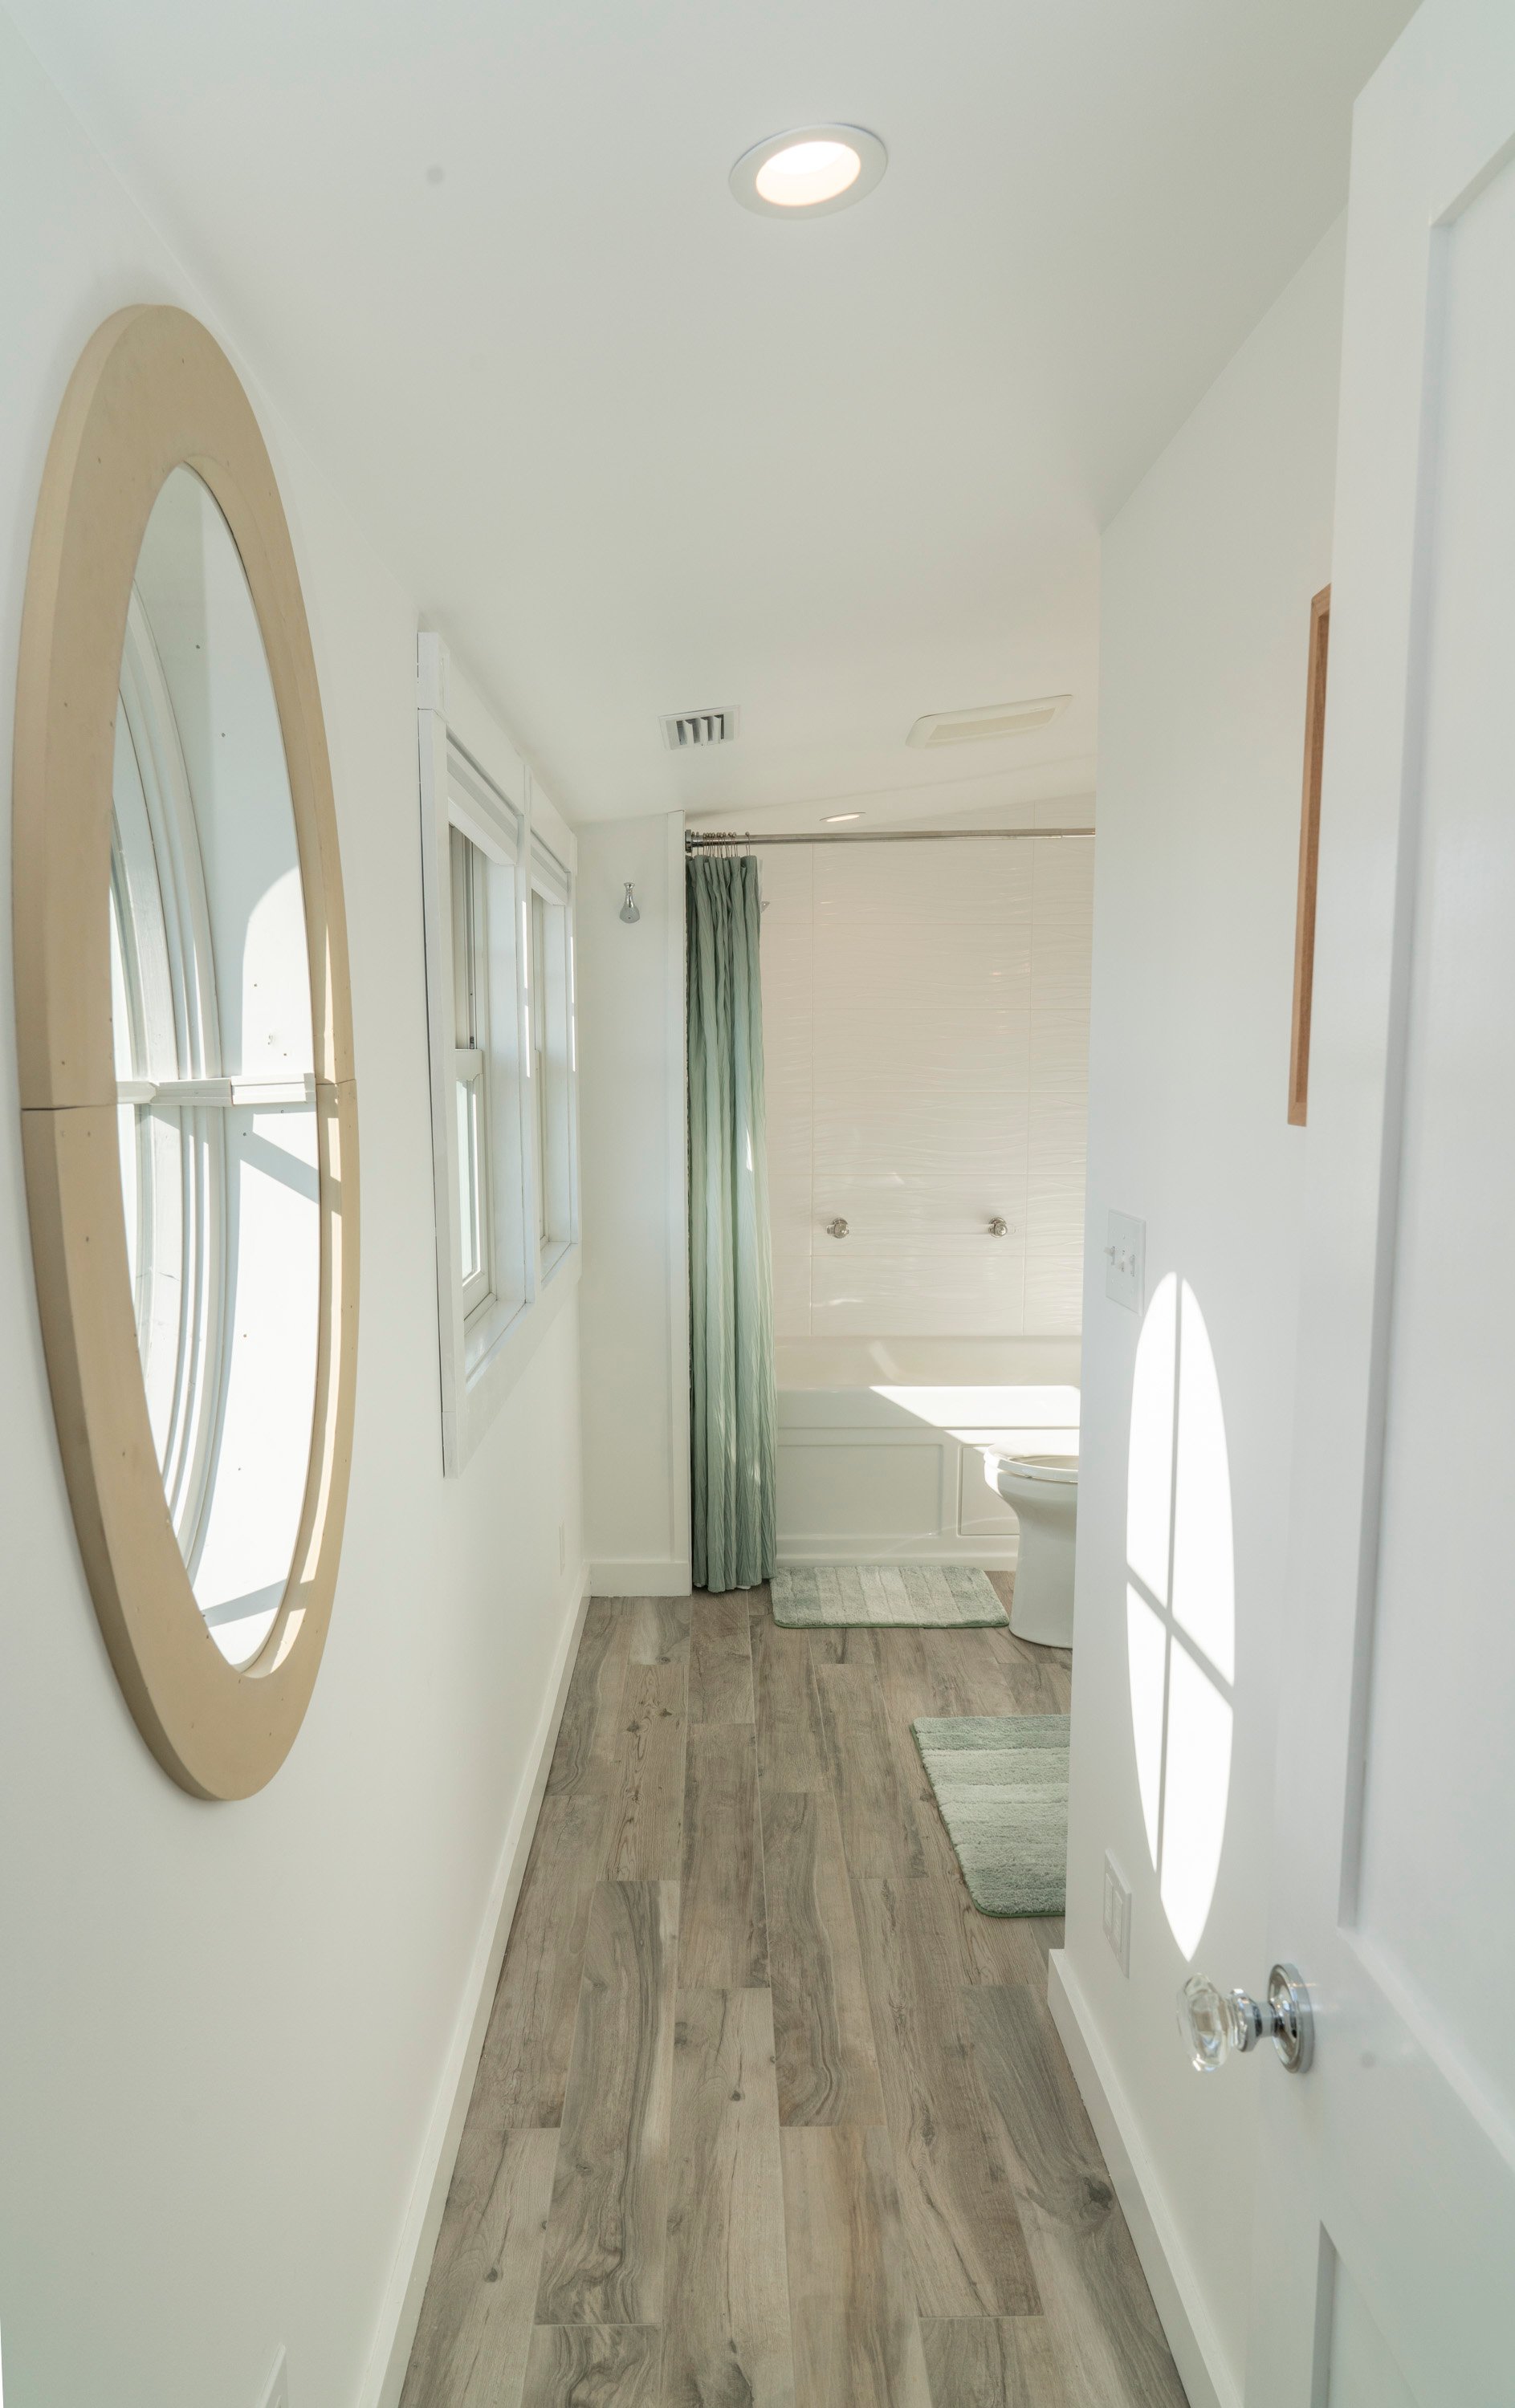 round window in bathroom with light wooden flooring